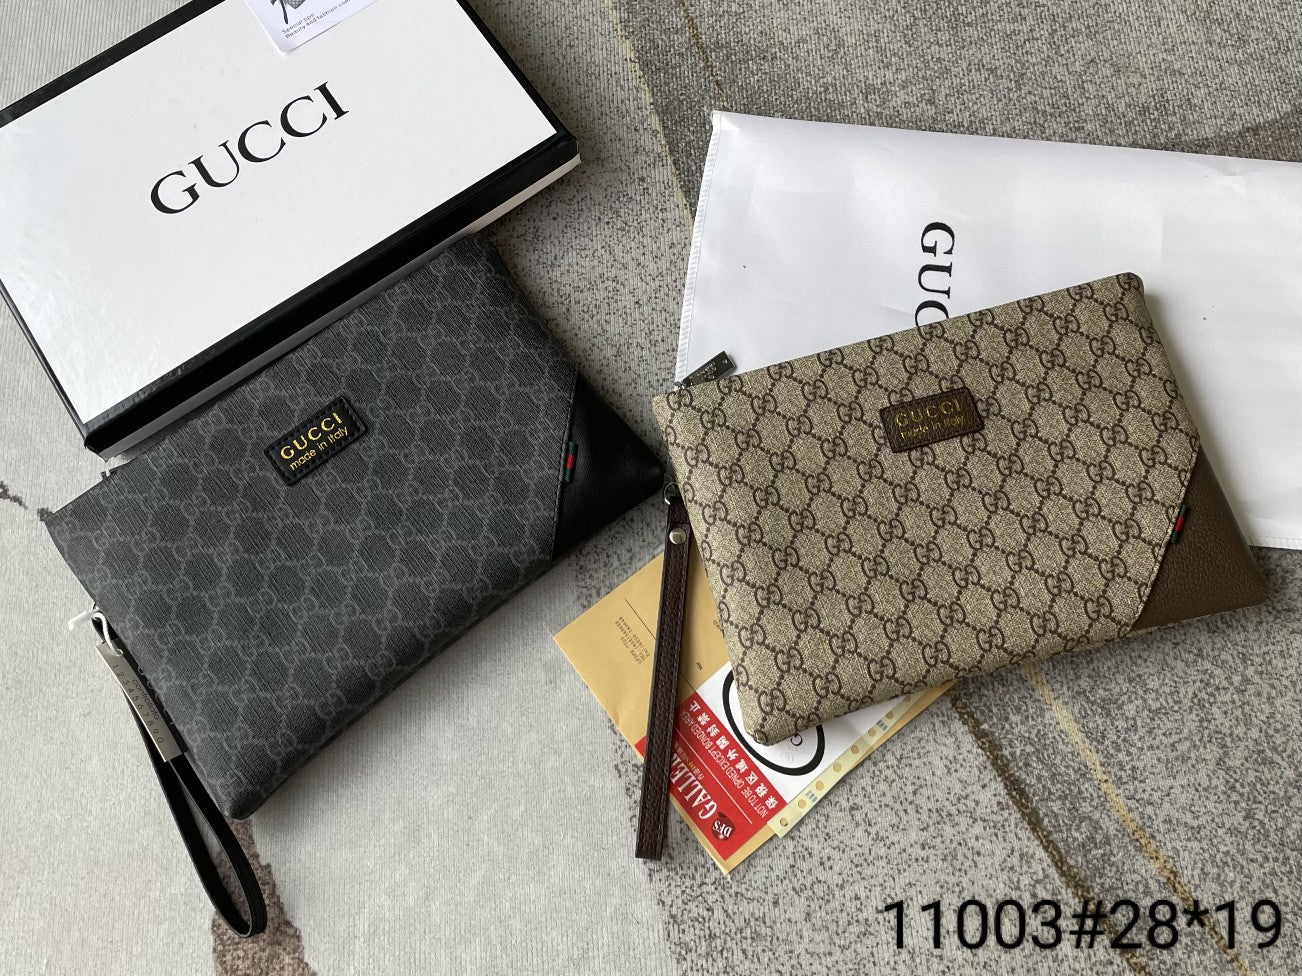 Gucci Handbags (wristlet)